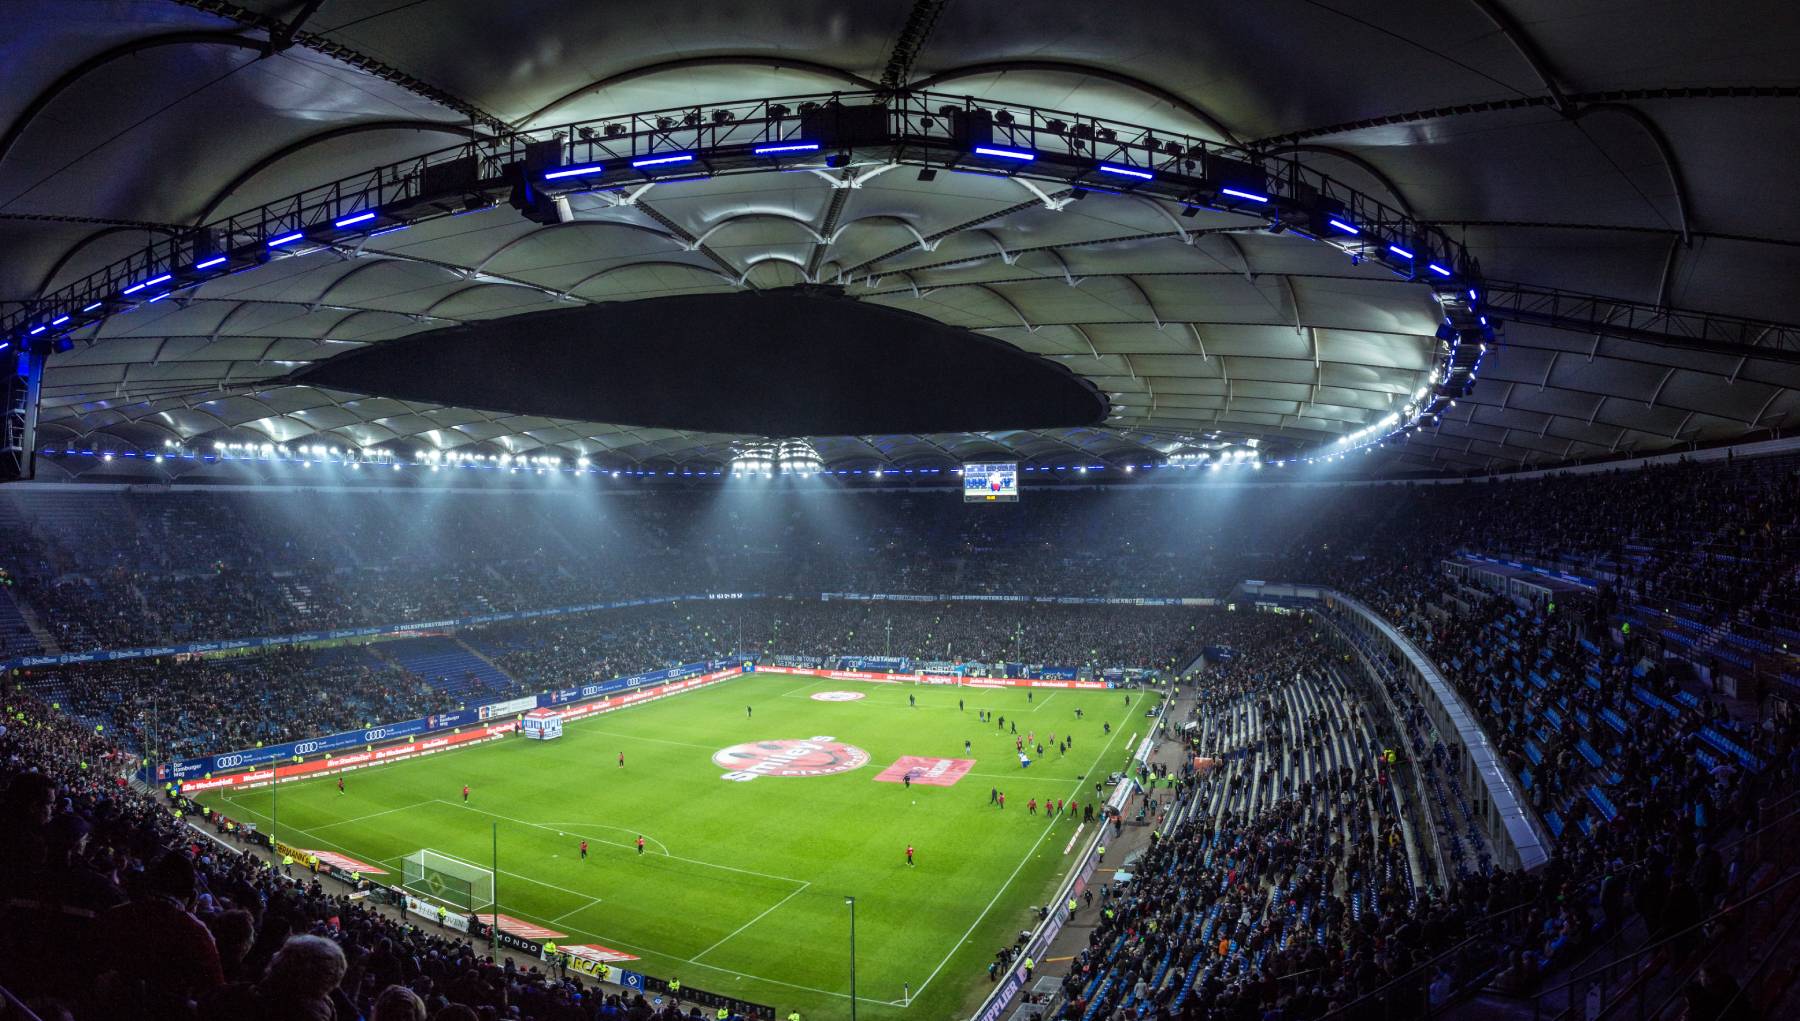 UEFA- ποδοσφαιρικοί σύλλογοι: Έκτακτη χρηματοδότηση ύψους 6 δισ. ευρώ